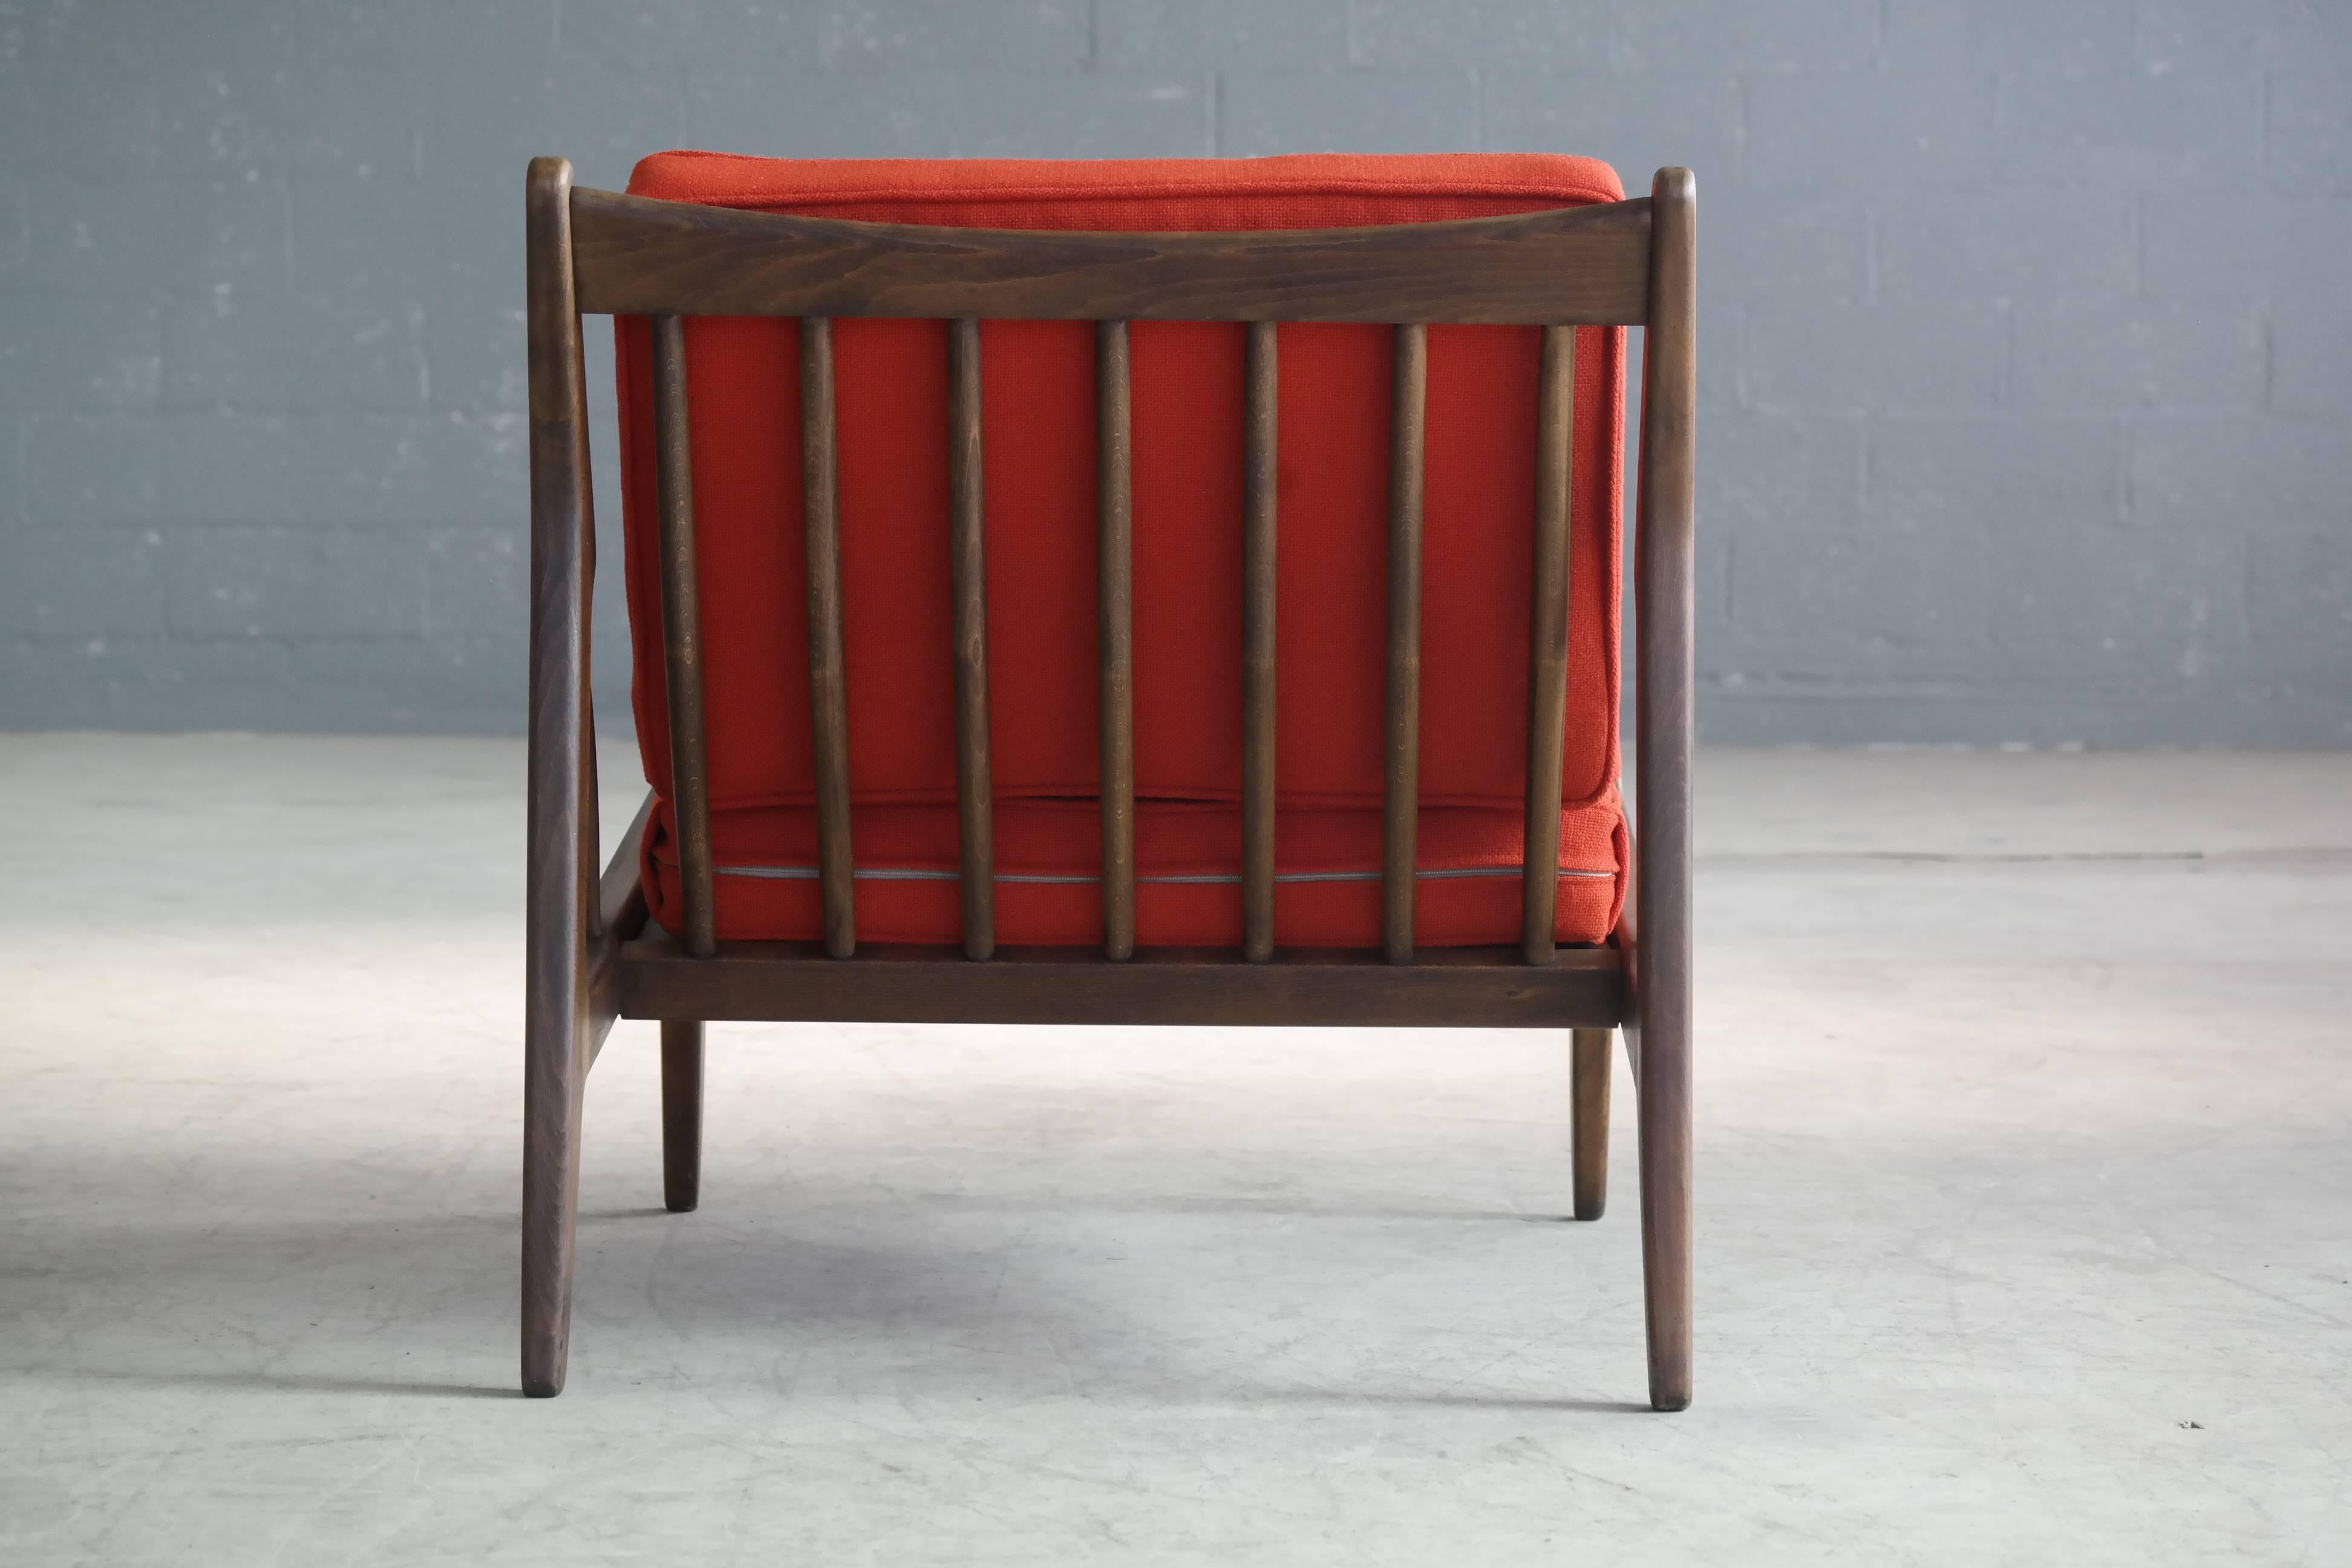 Stained Ib Kofod-Larsen Lounge or Slipper Chair Danish Midcentury